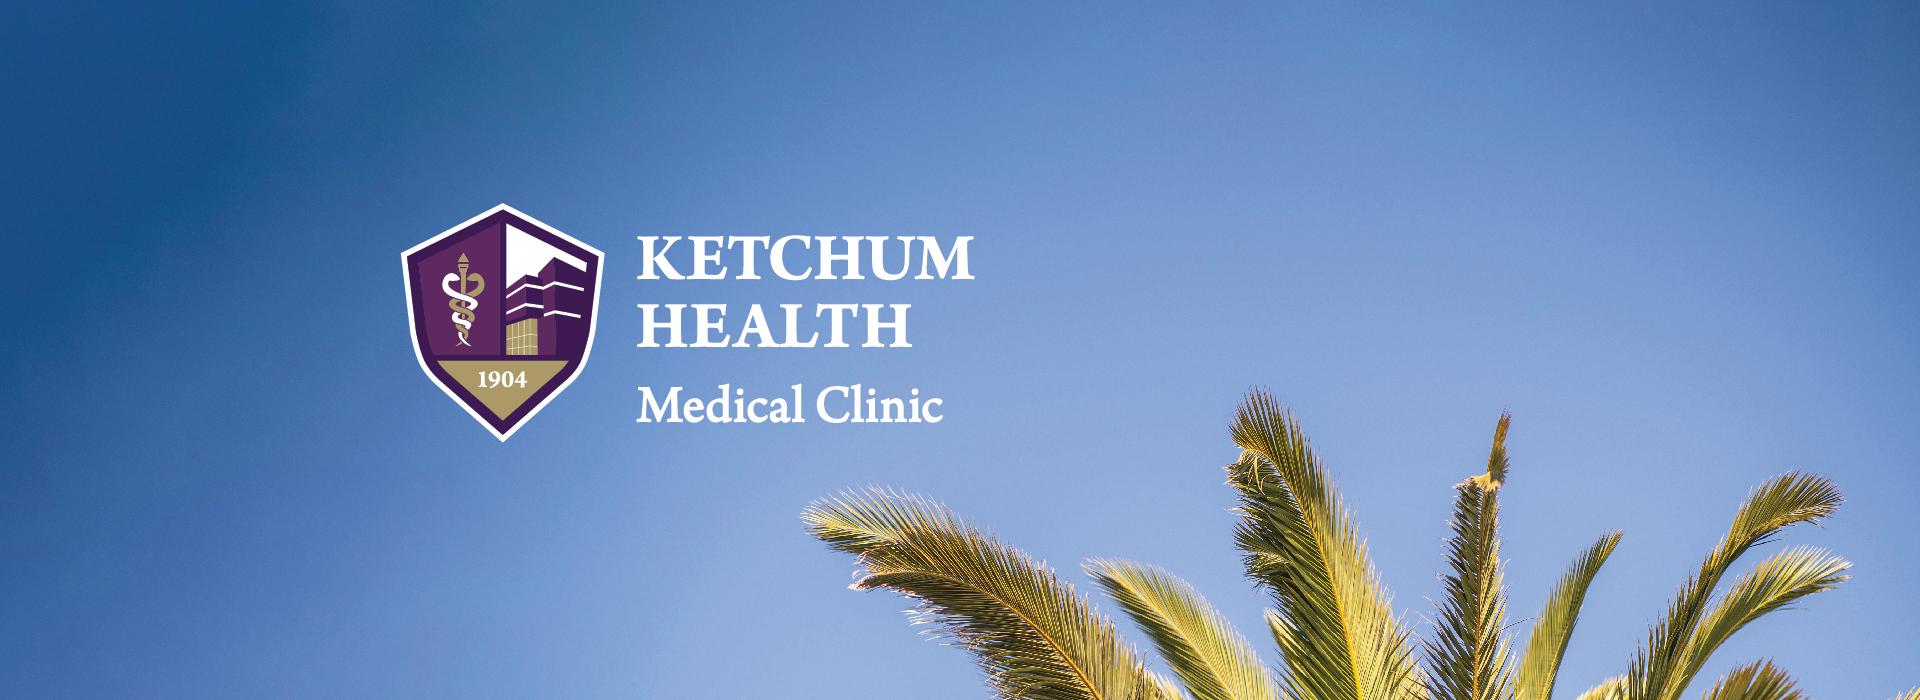 Ketchum Health Medical Clinic